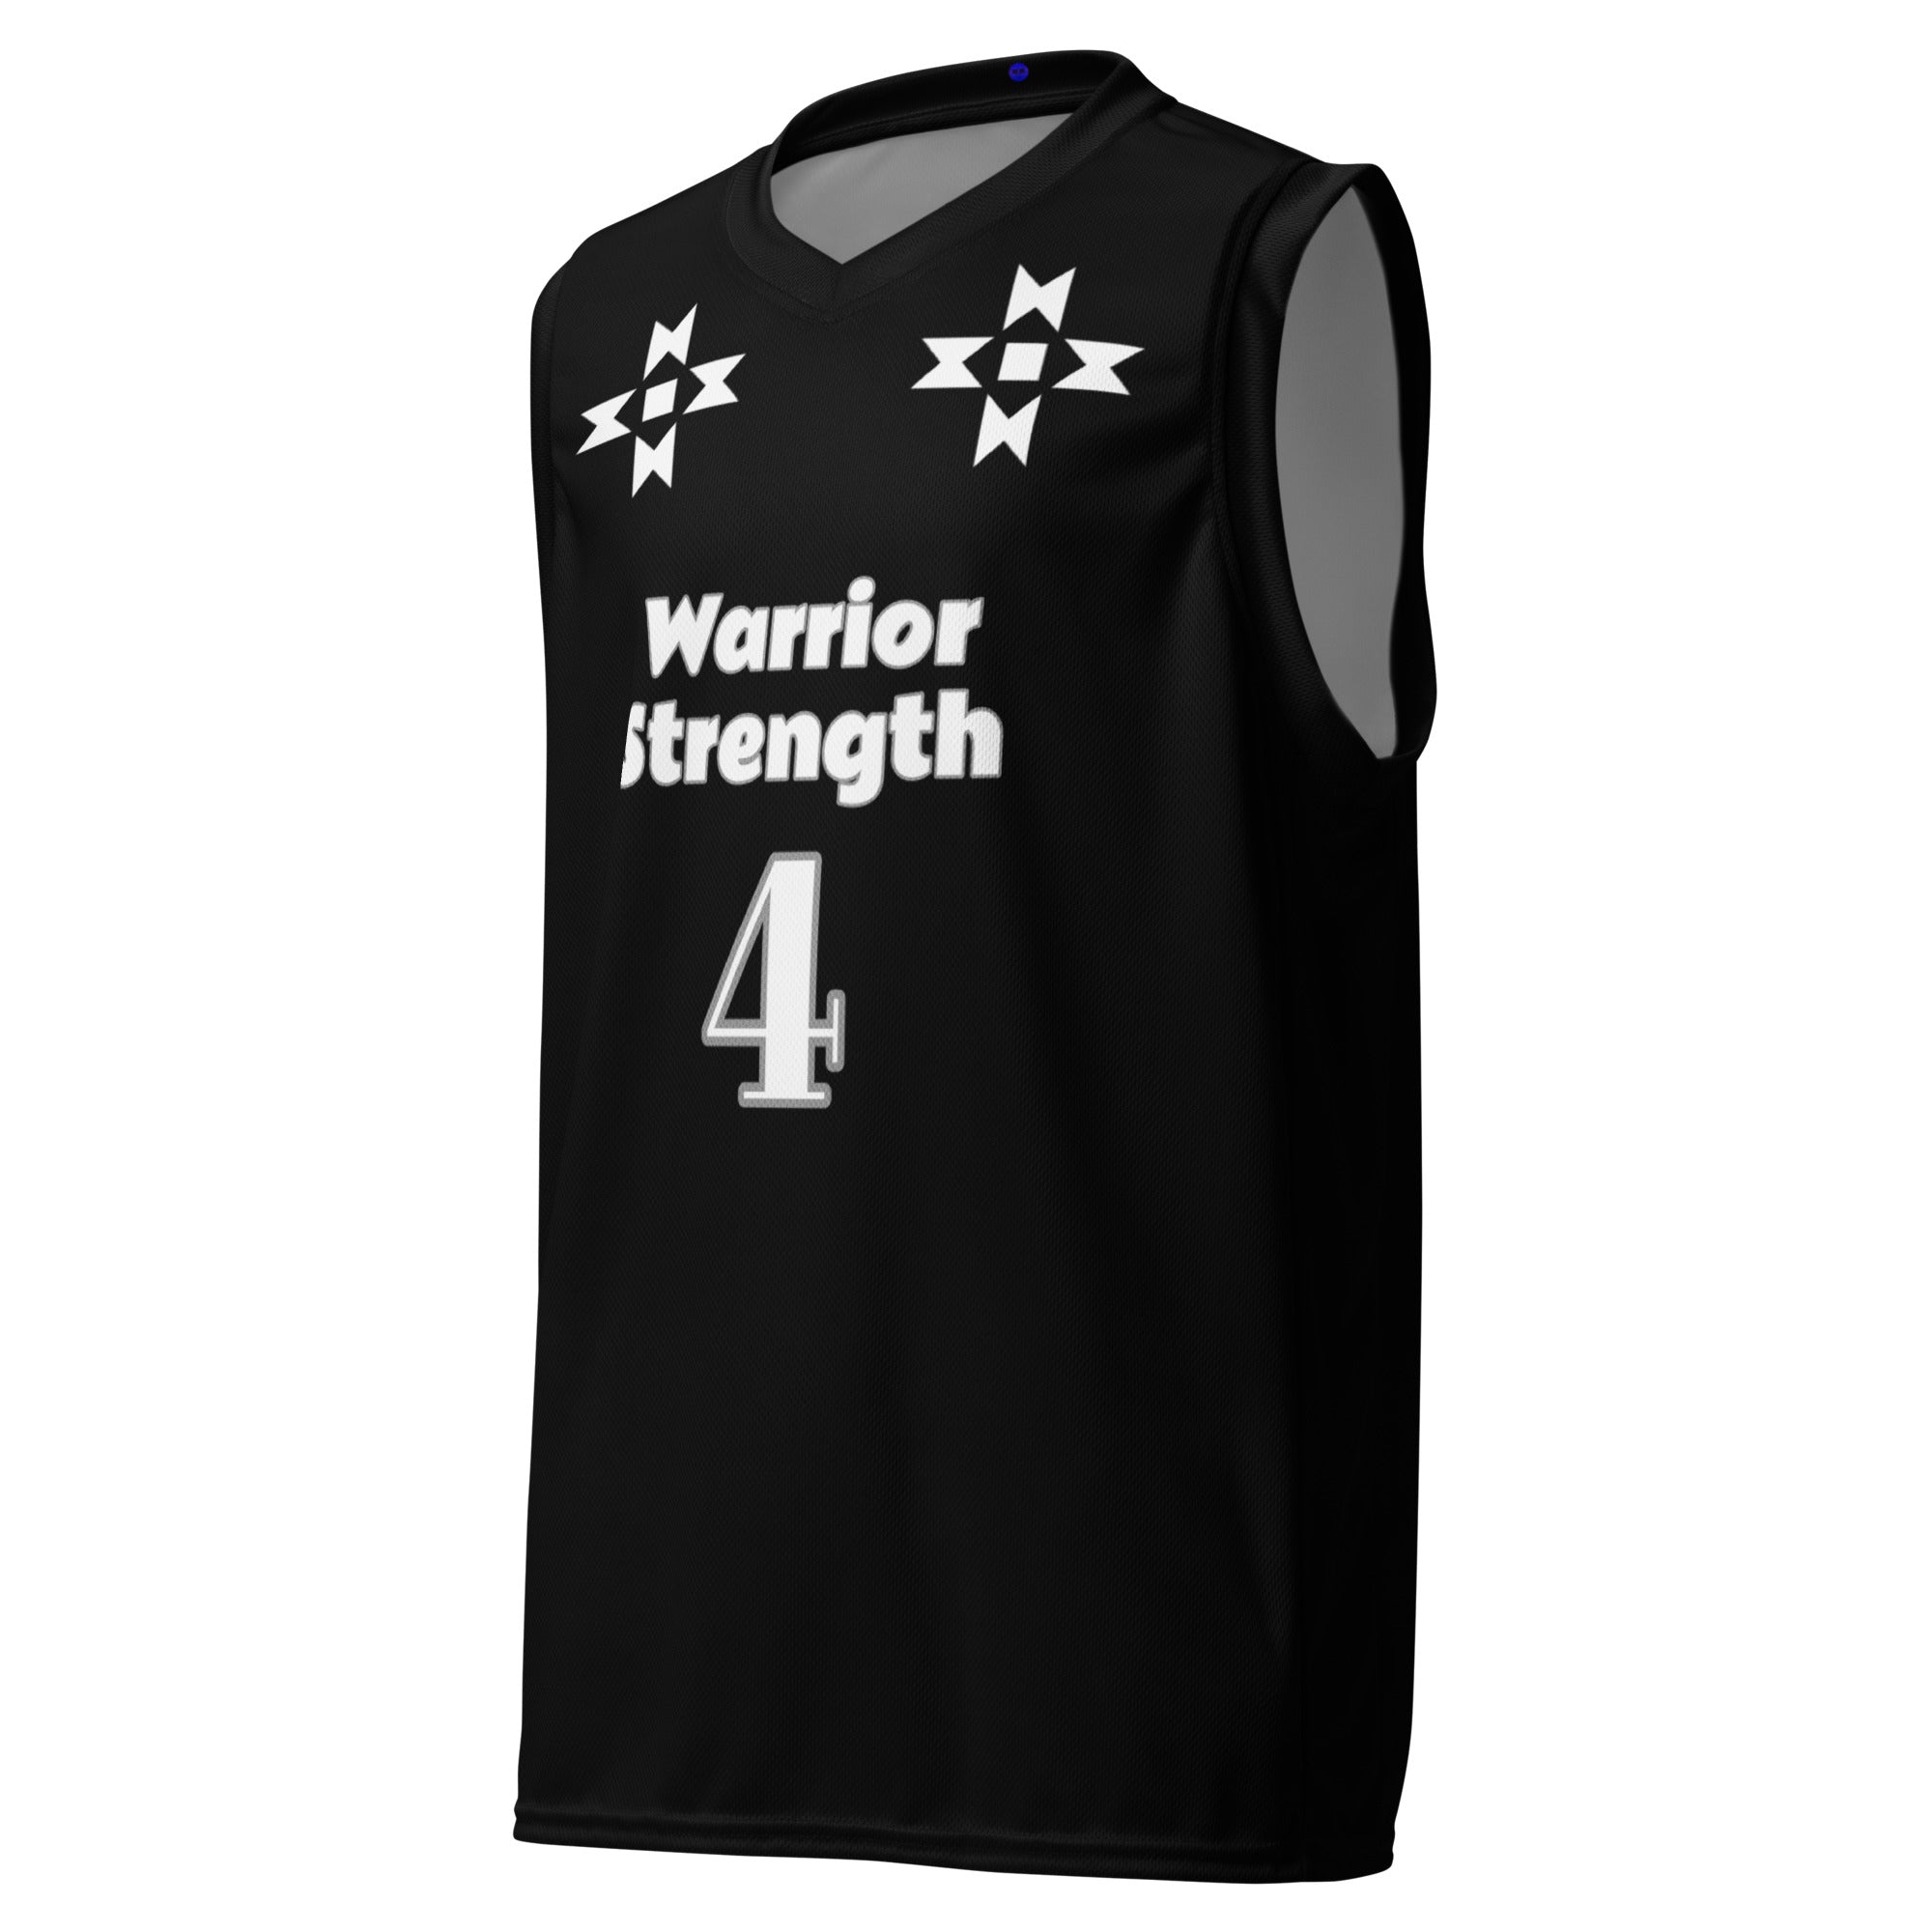 Warrior Strength, Native Stars Black Recycled unisex basketball jersey